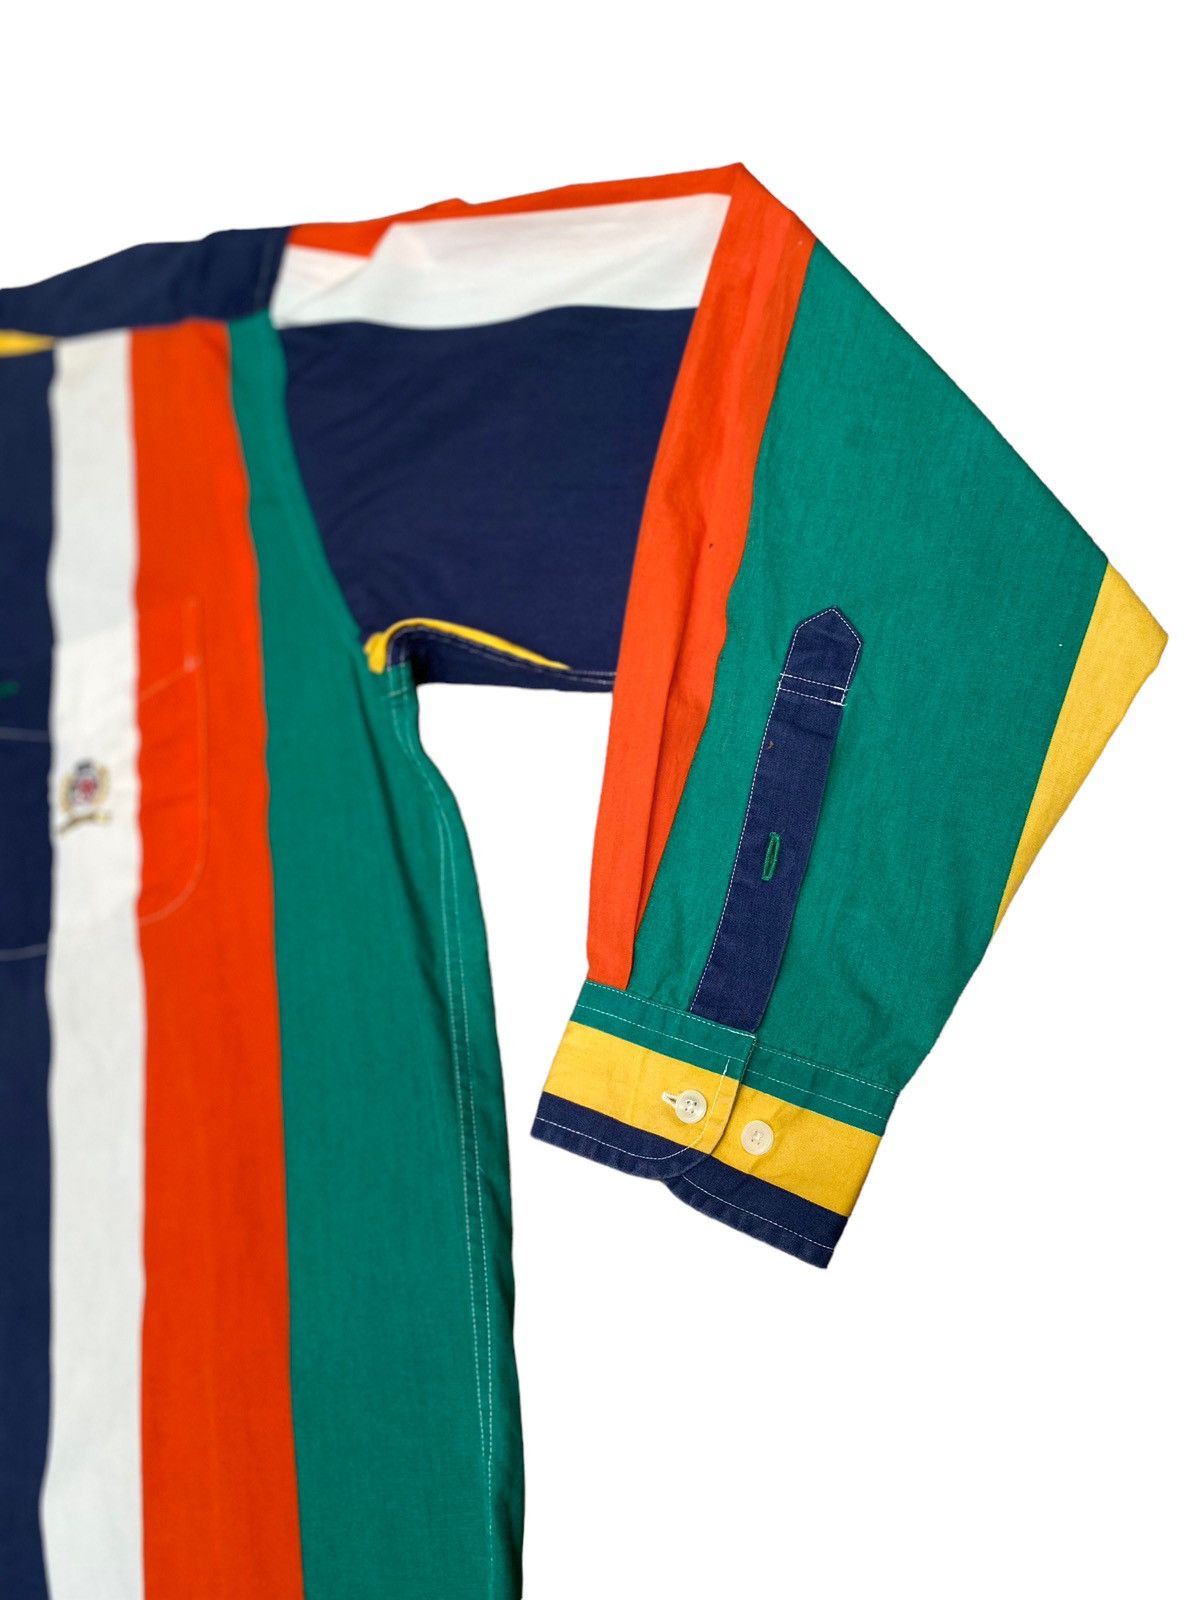 Vintage Rare Design Vintage Brand Tommy Hilfiger Stripe Shirt 1990s Size US L / EU 52-54 / 3 - 5 Thumbnail